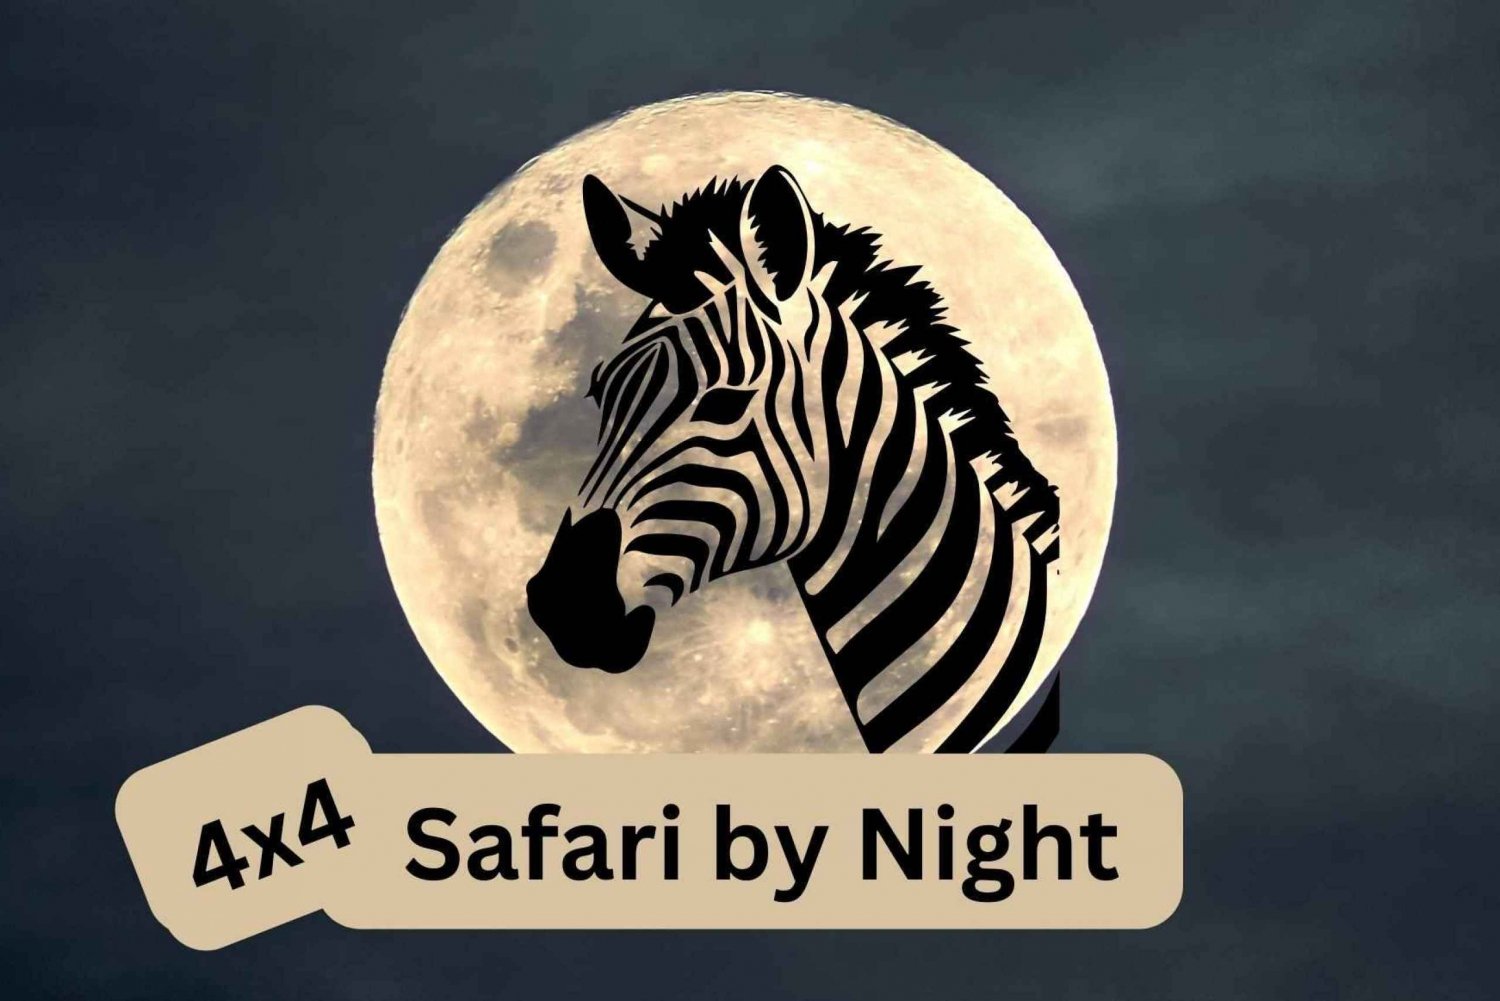 Victoriafallene: Safari om natten i 4x4 rundt Victoriafallene